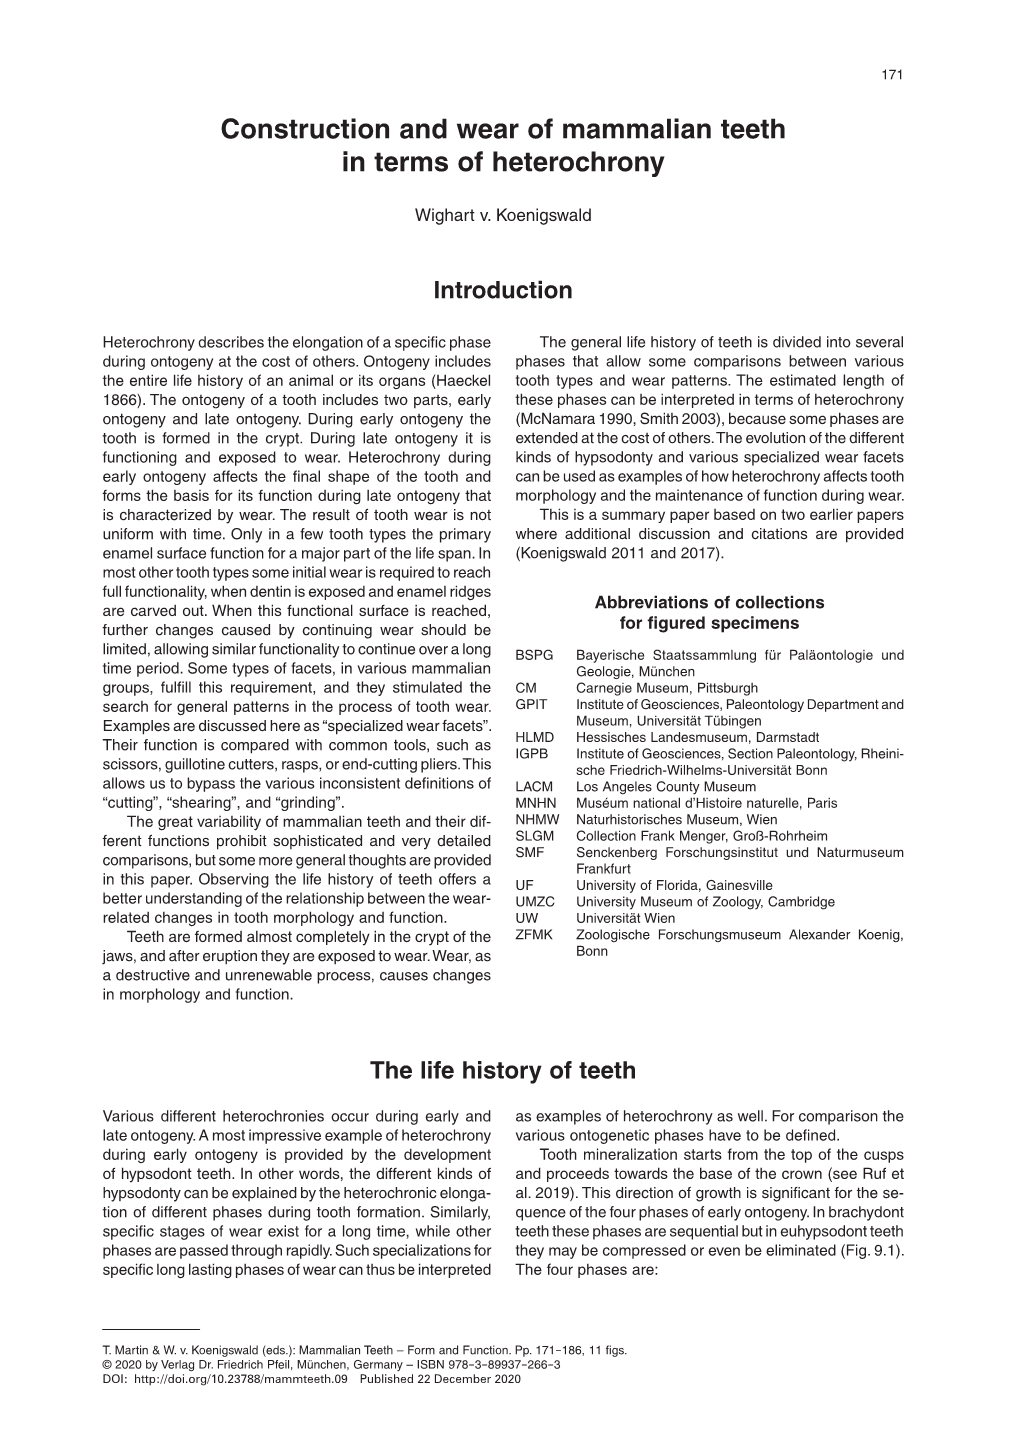 Construction and Wear of Mammalian Teeth in Terms of Heterochrony